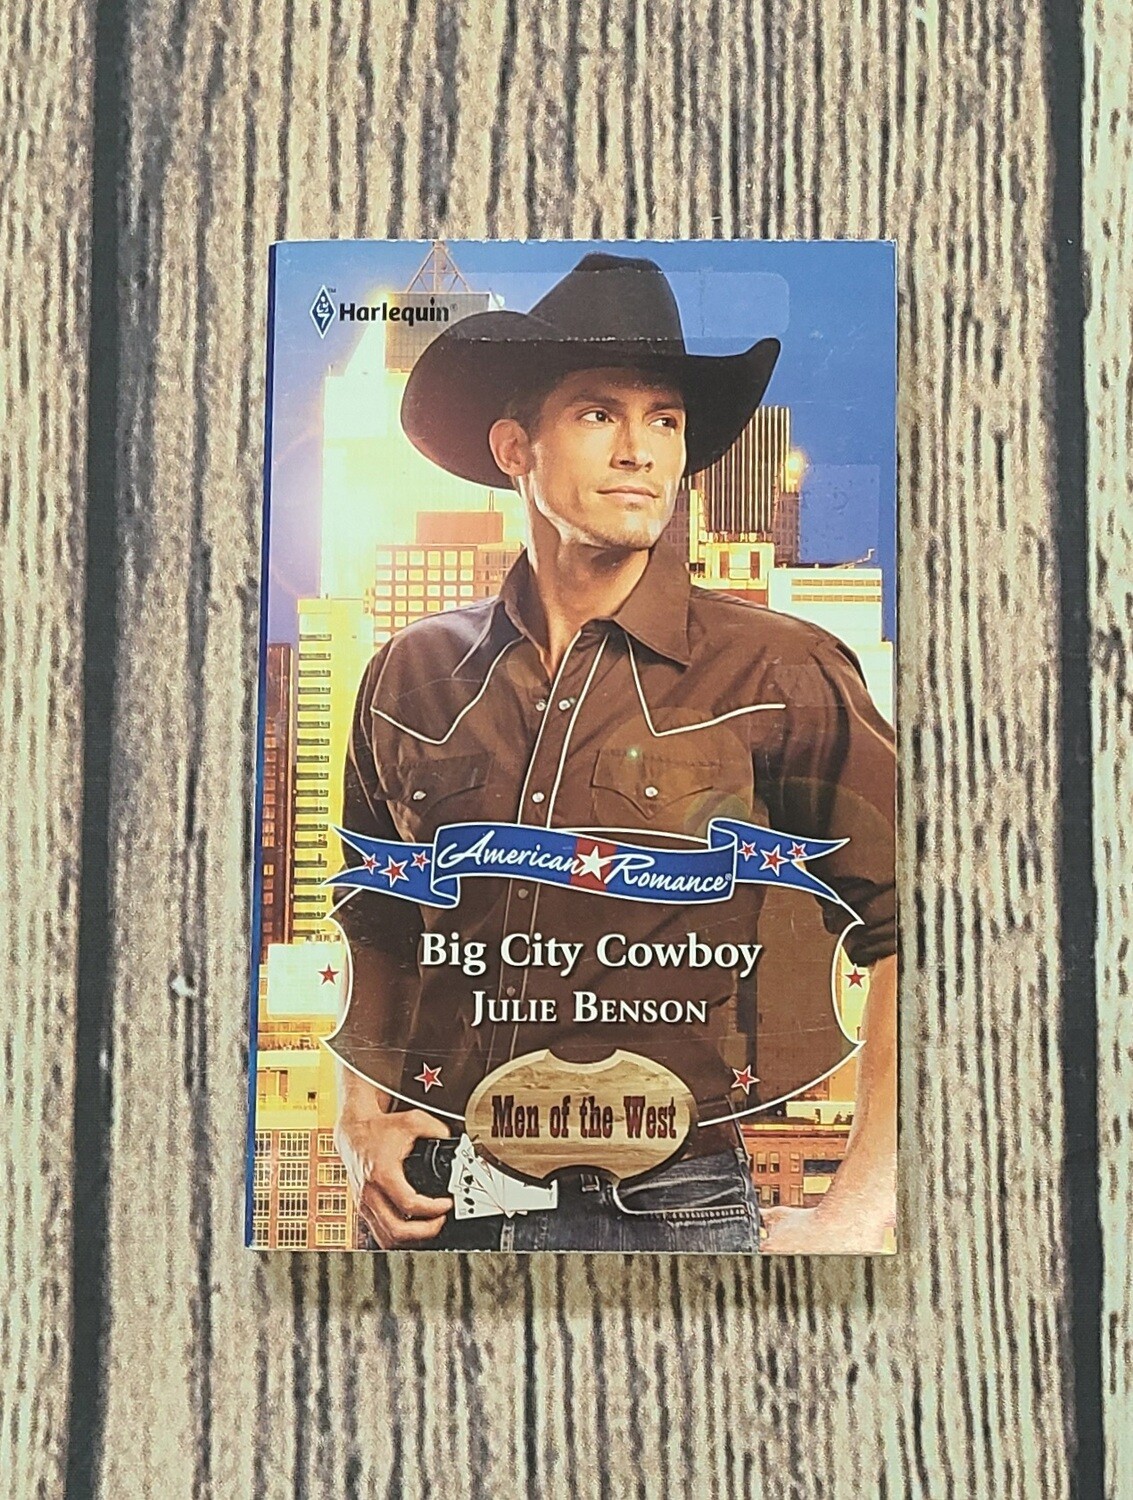 Big City Cowboy by Julie Benson